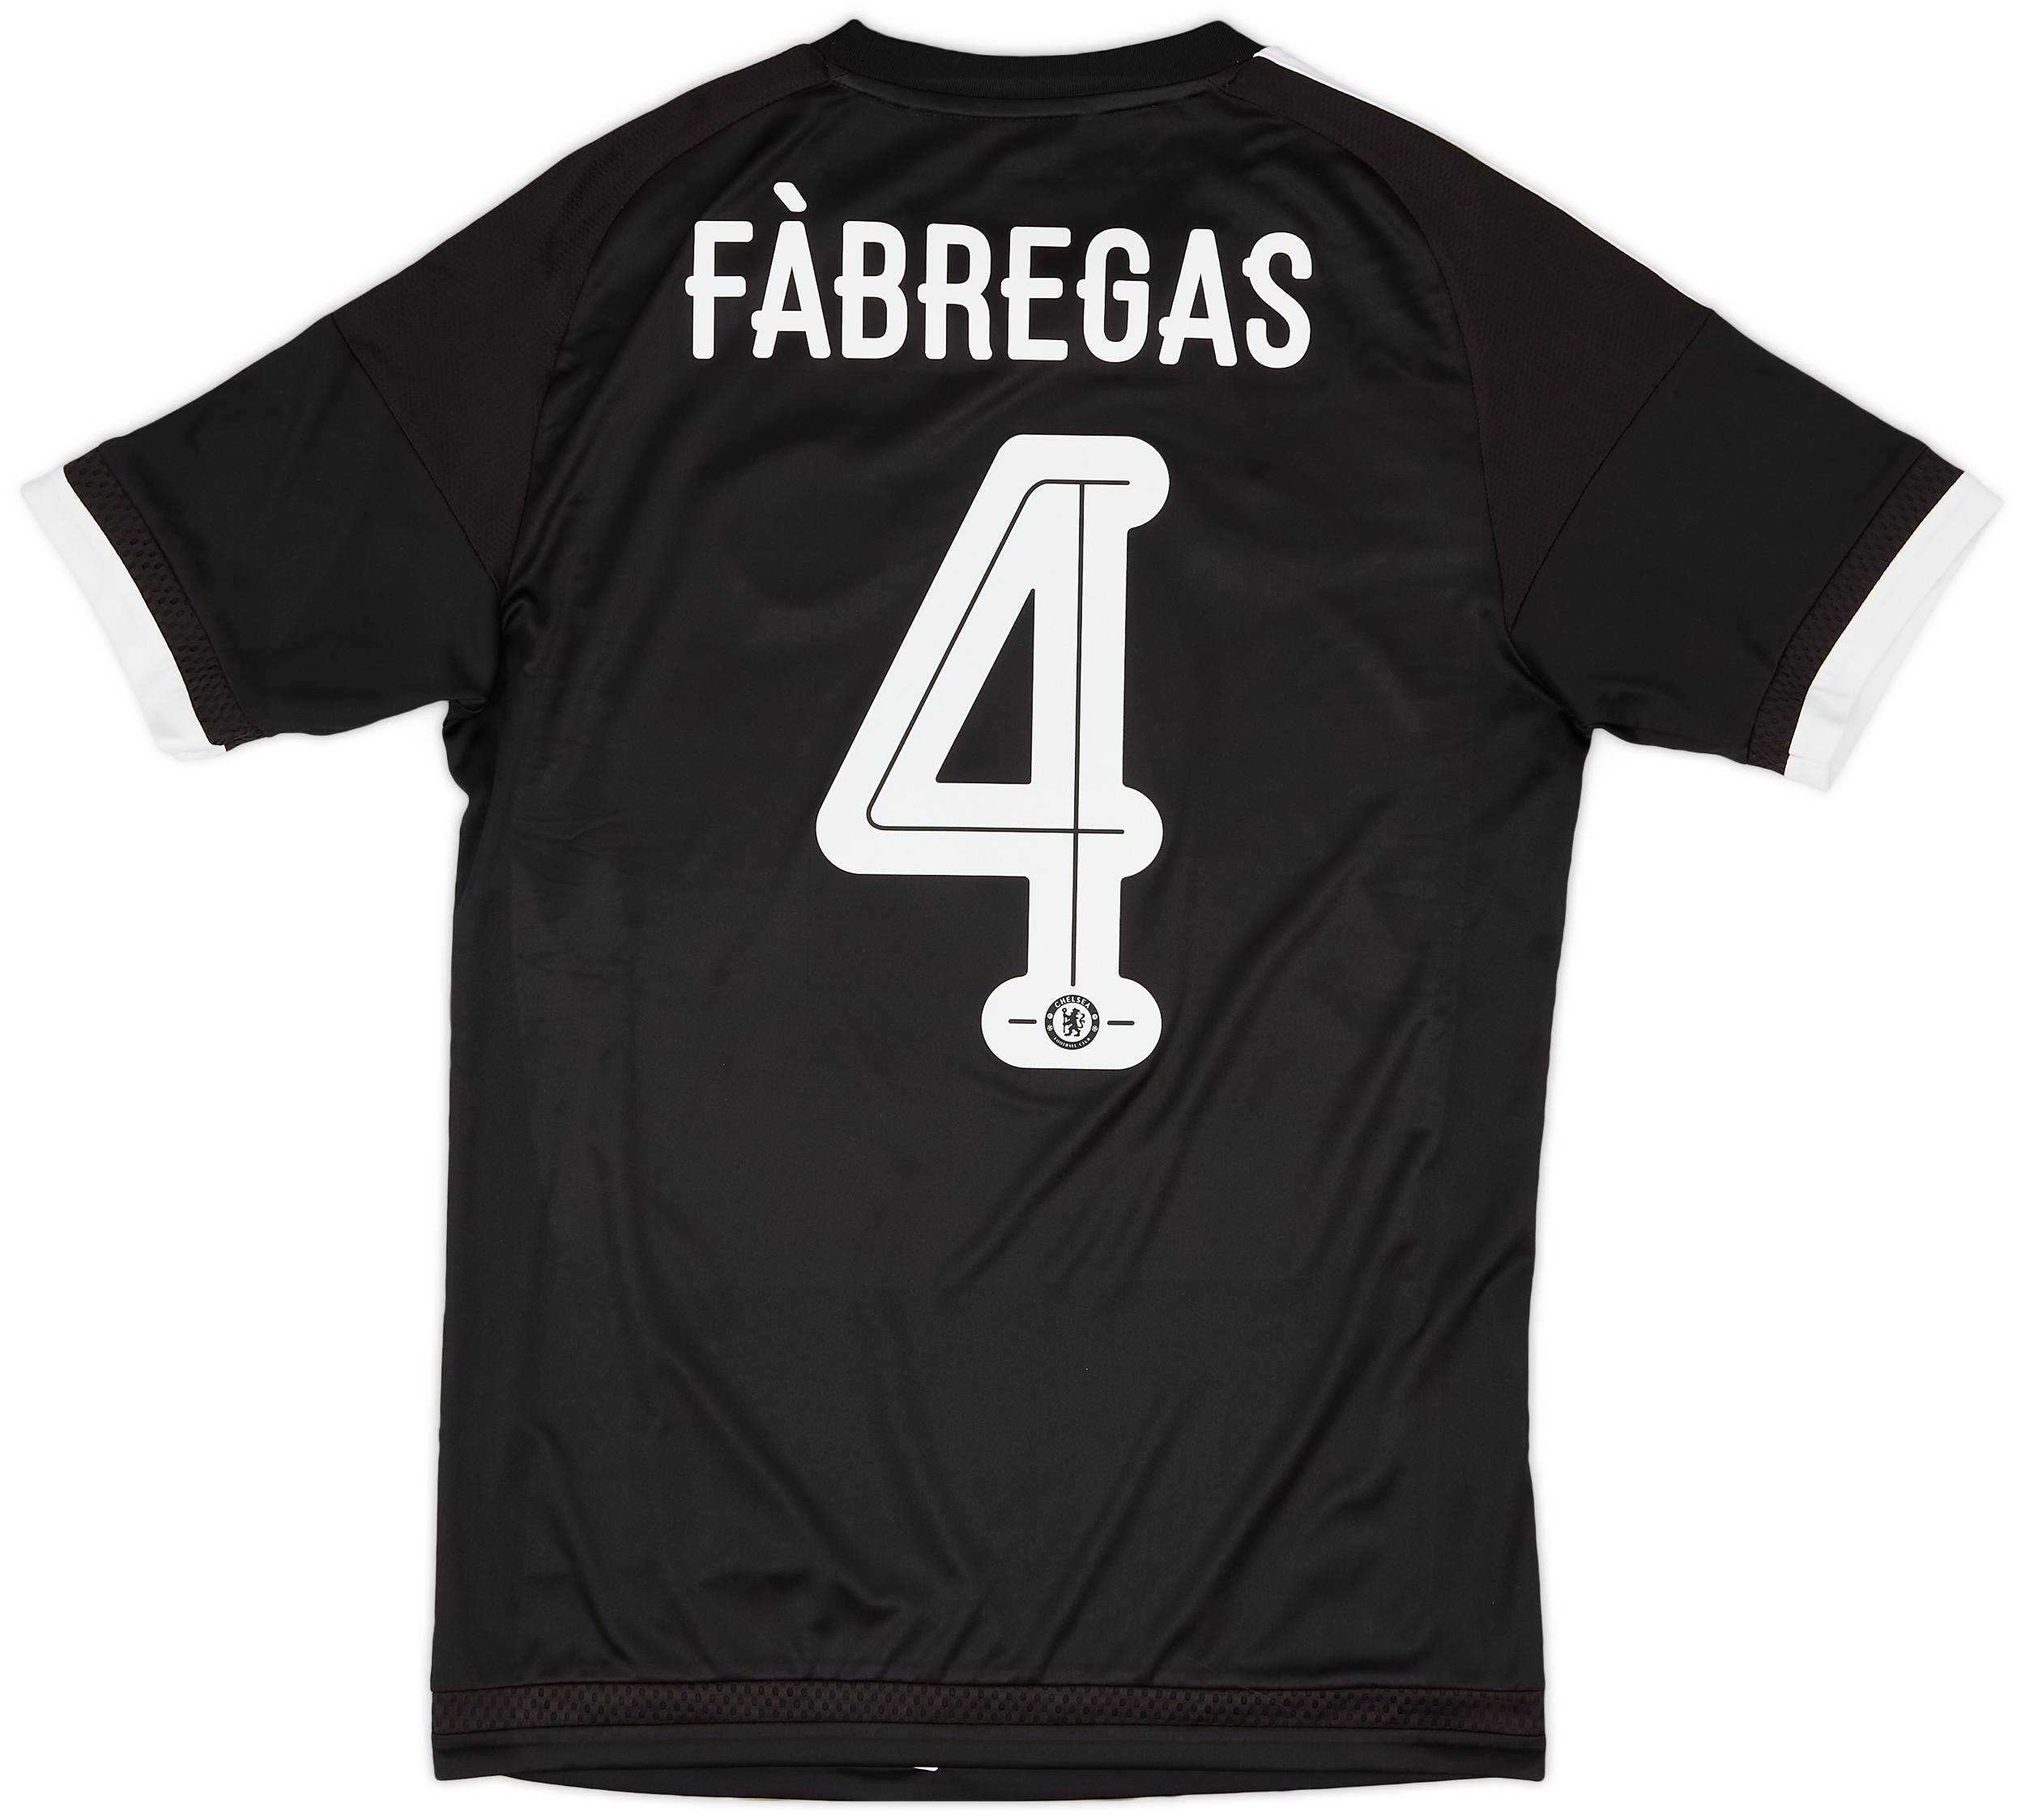 2015-16 Chelsea Third Shirt Fabregas #4 - 9/10 - (S)